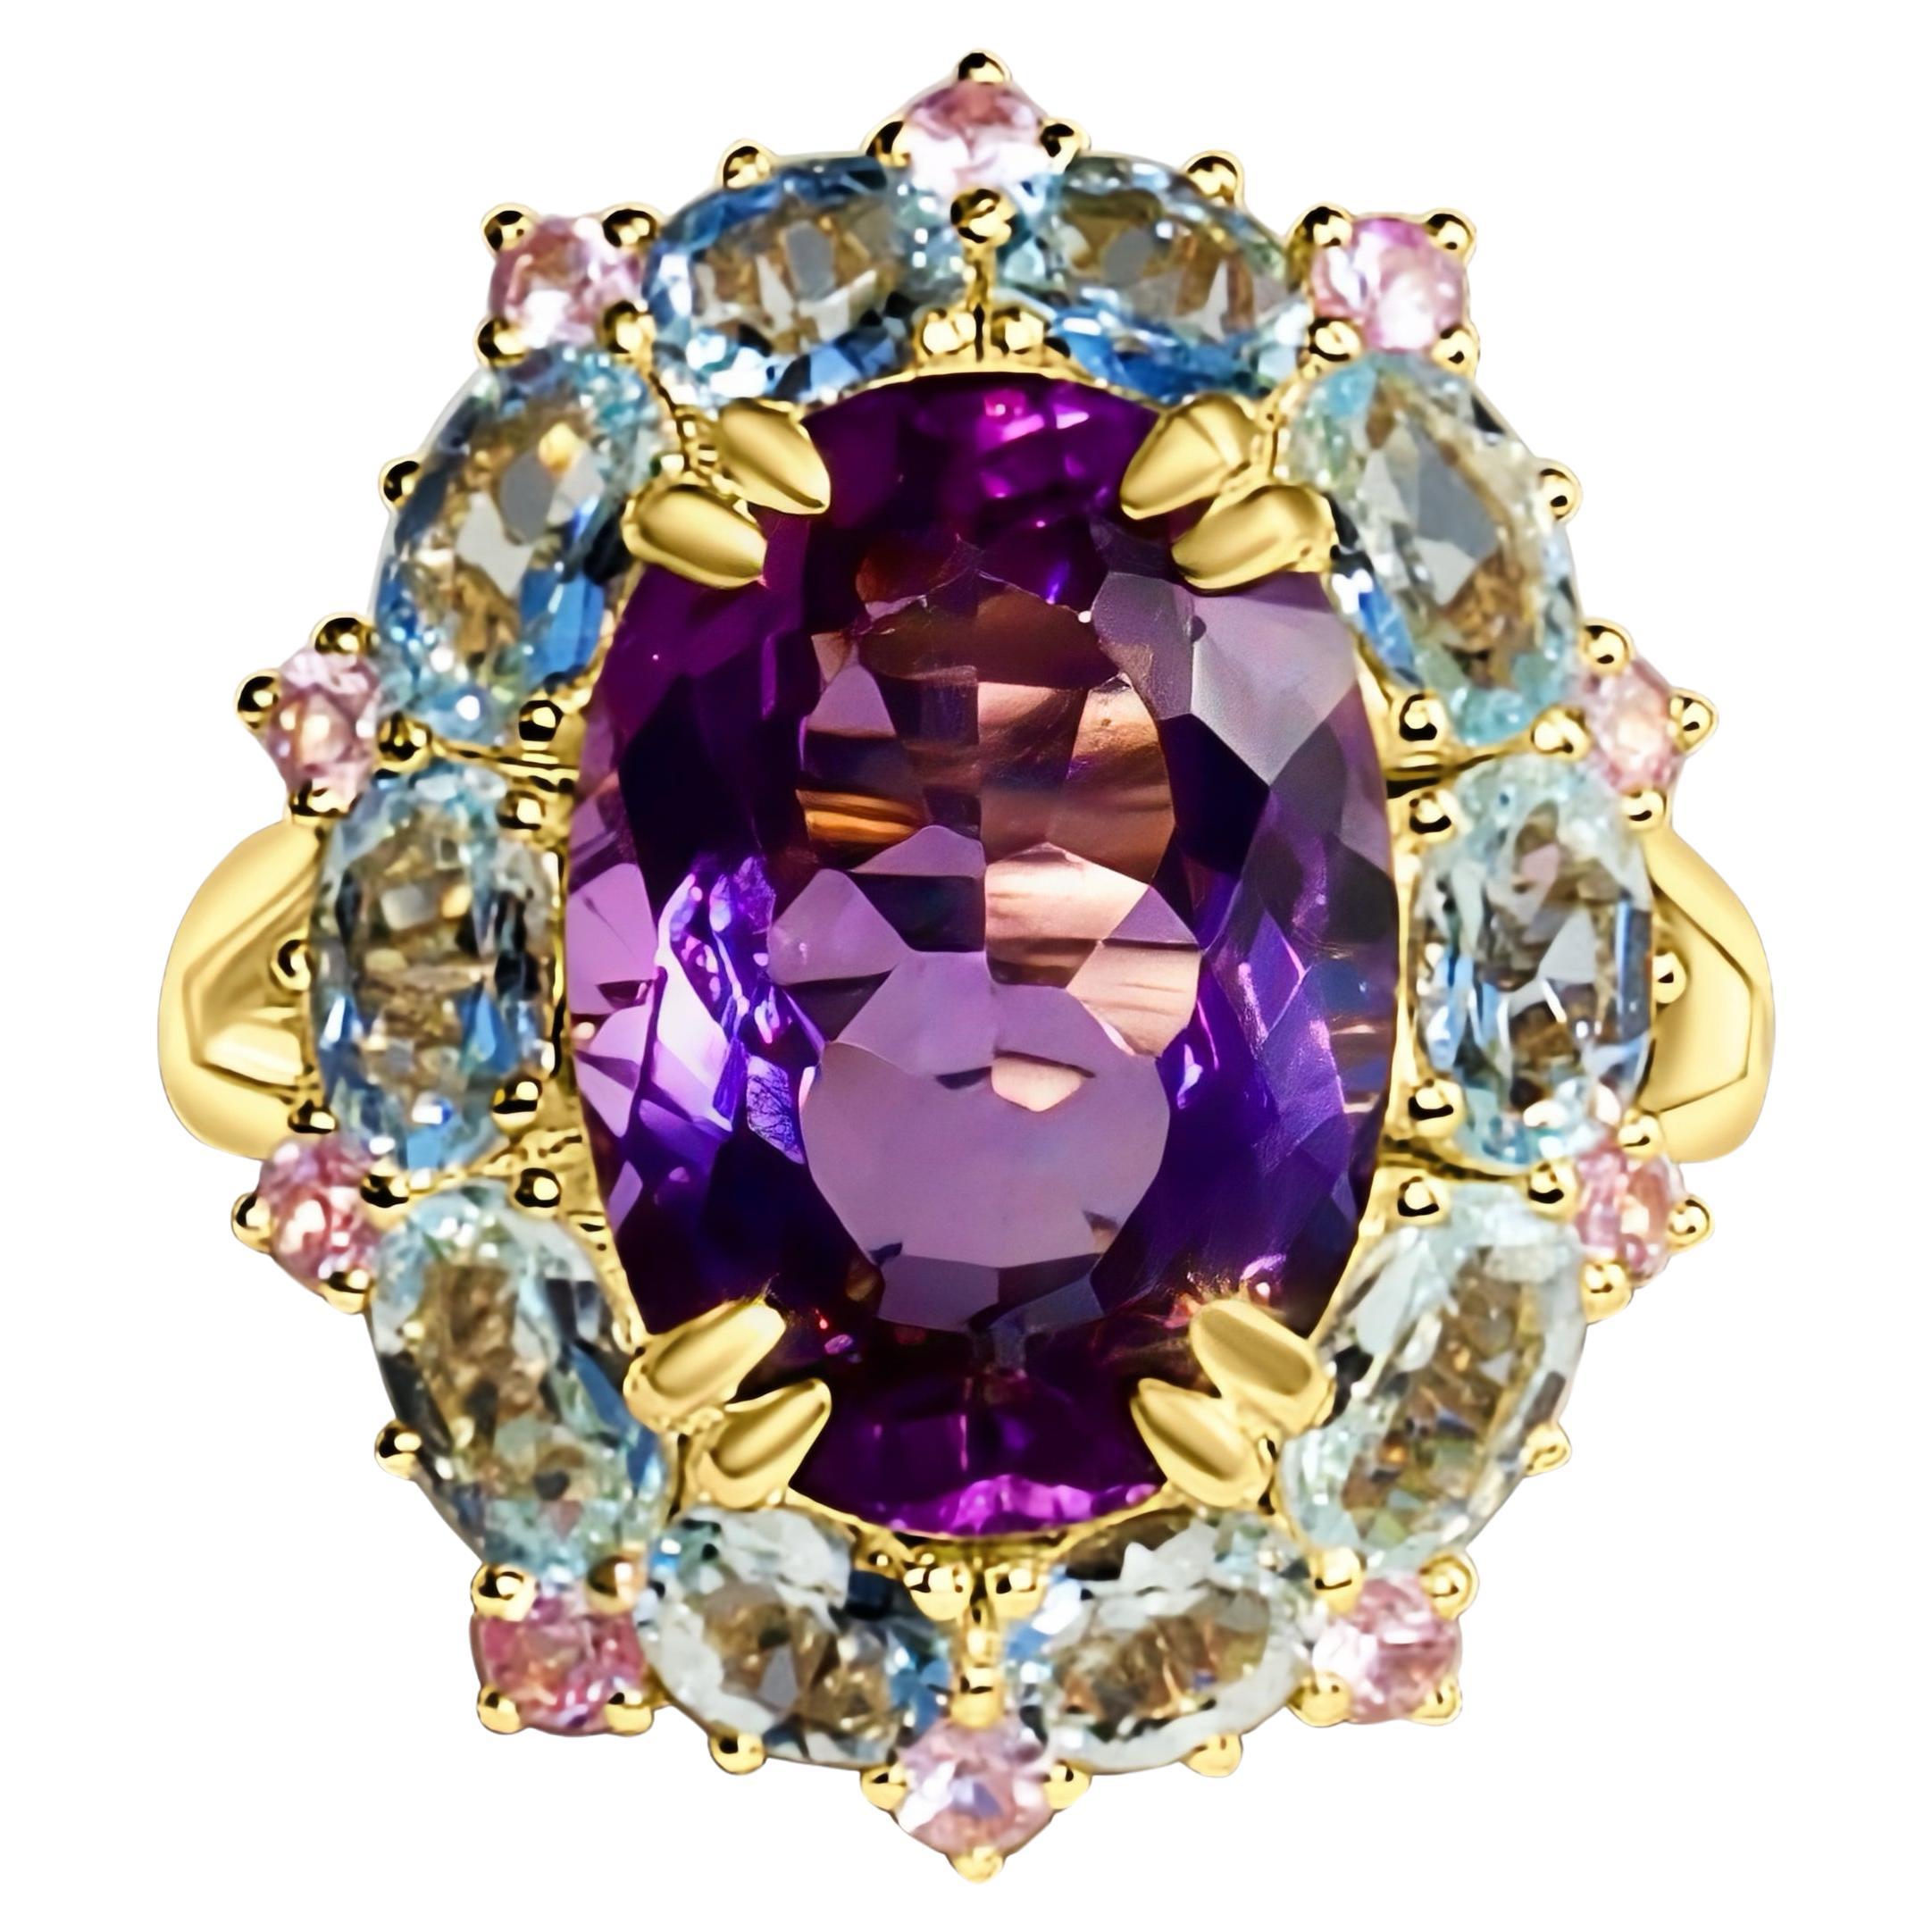 Kai Purple Amethyst Aquamarine Pink Sapphire Cluster Cocktail Ring